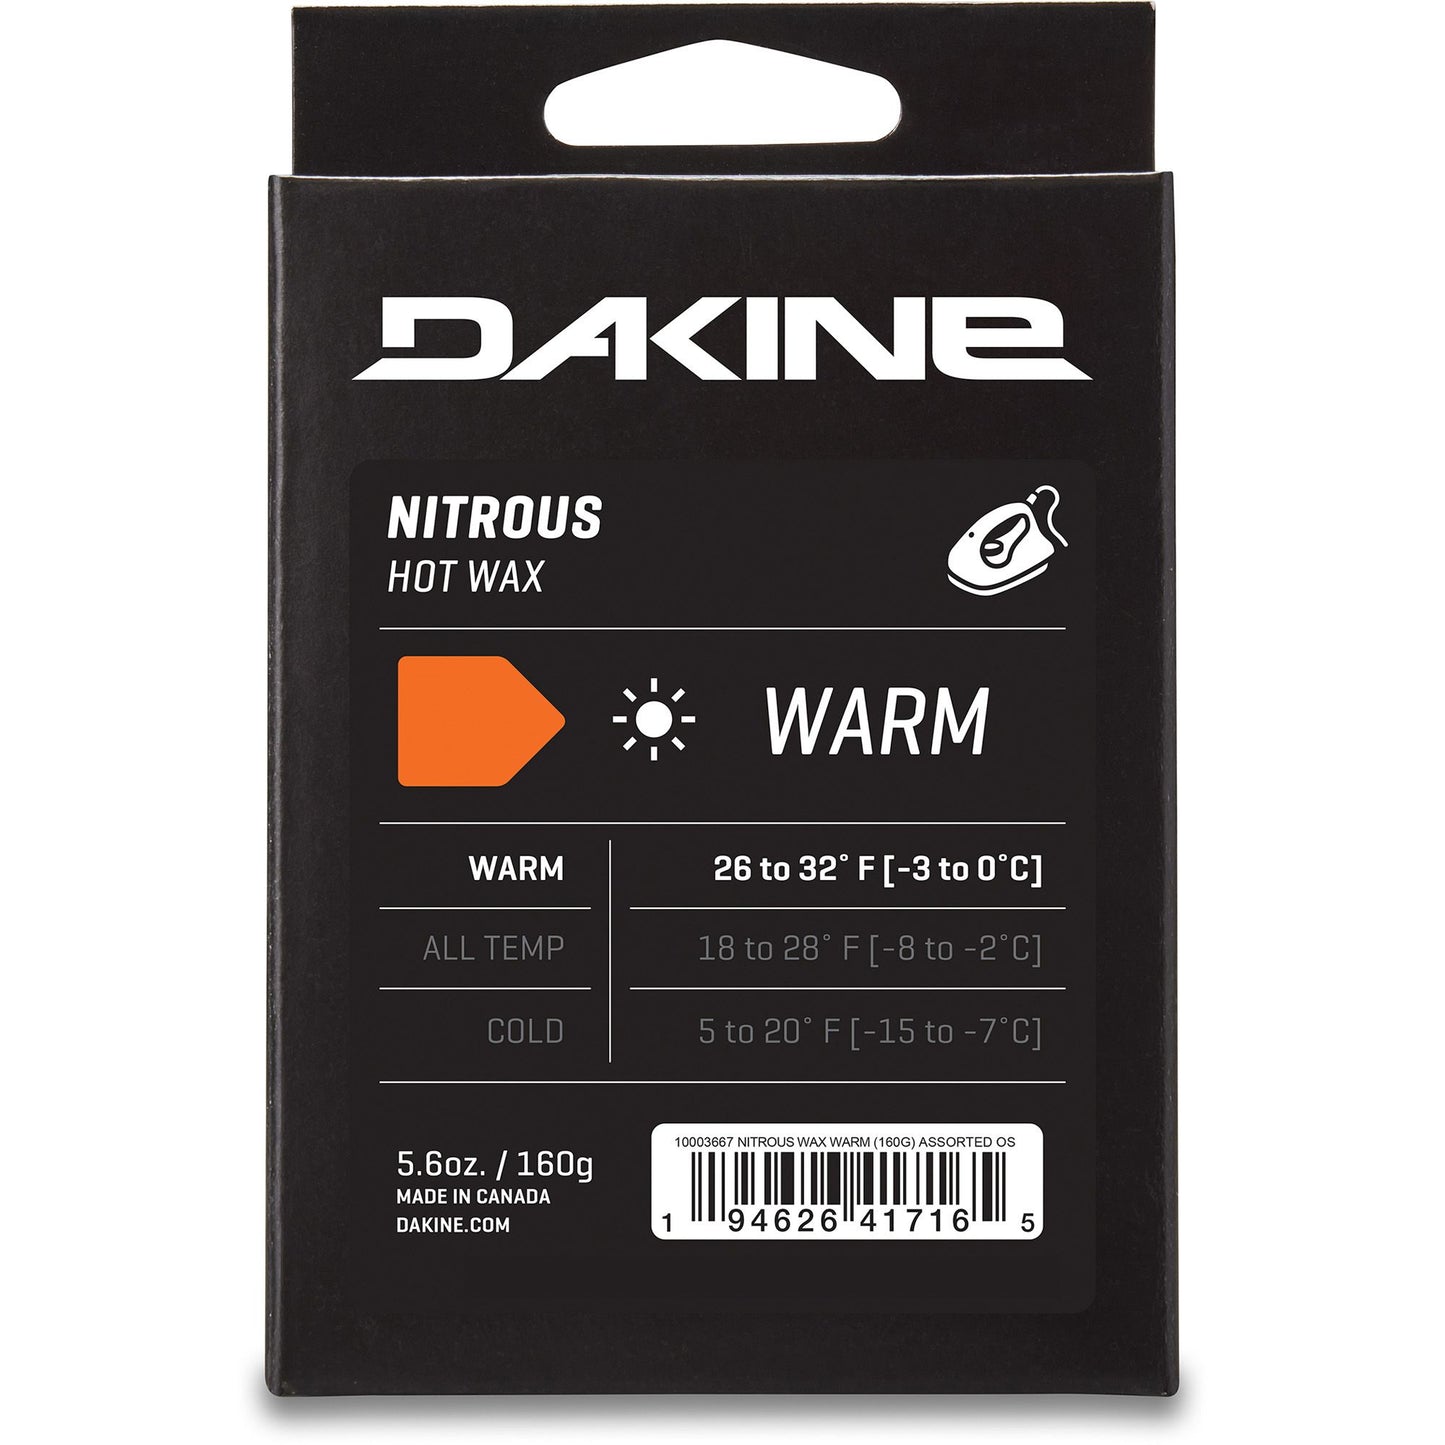 Dakine Nitrous Warm Wax 160g Multicolor OS Wax